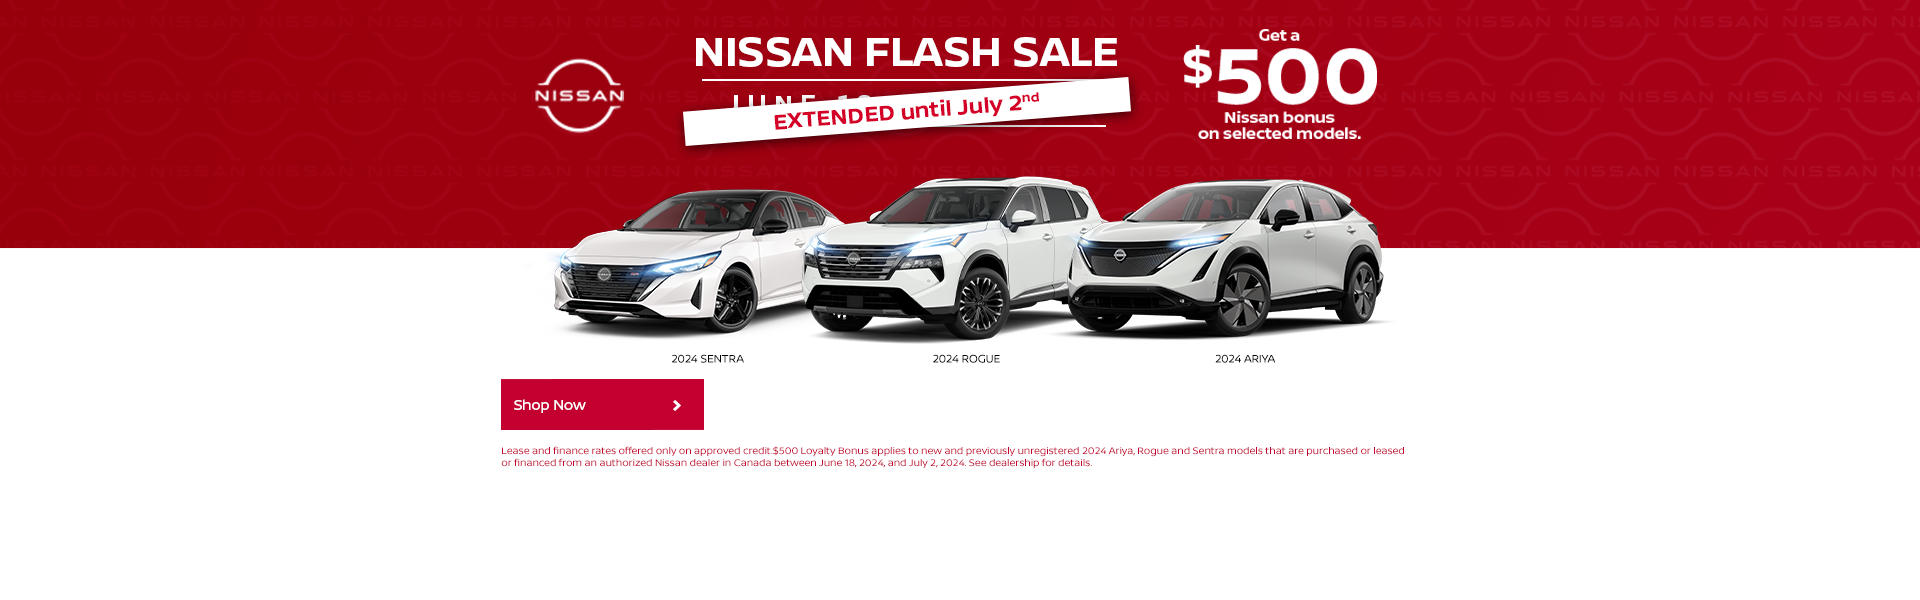 Nissan Flash Sale Event